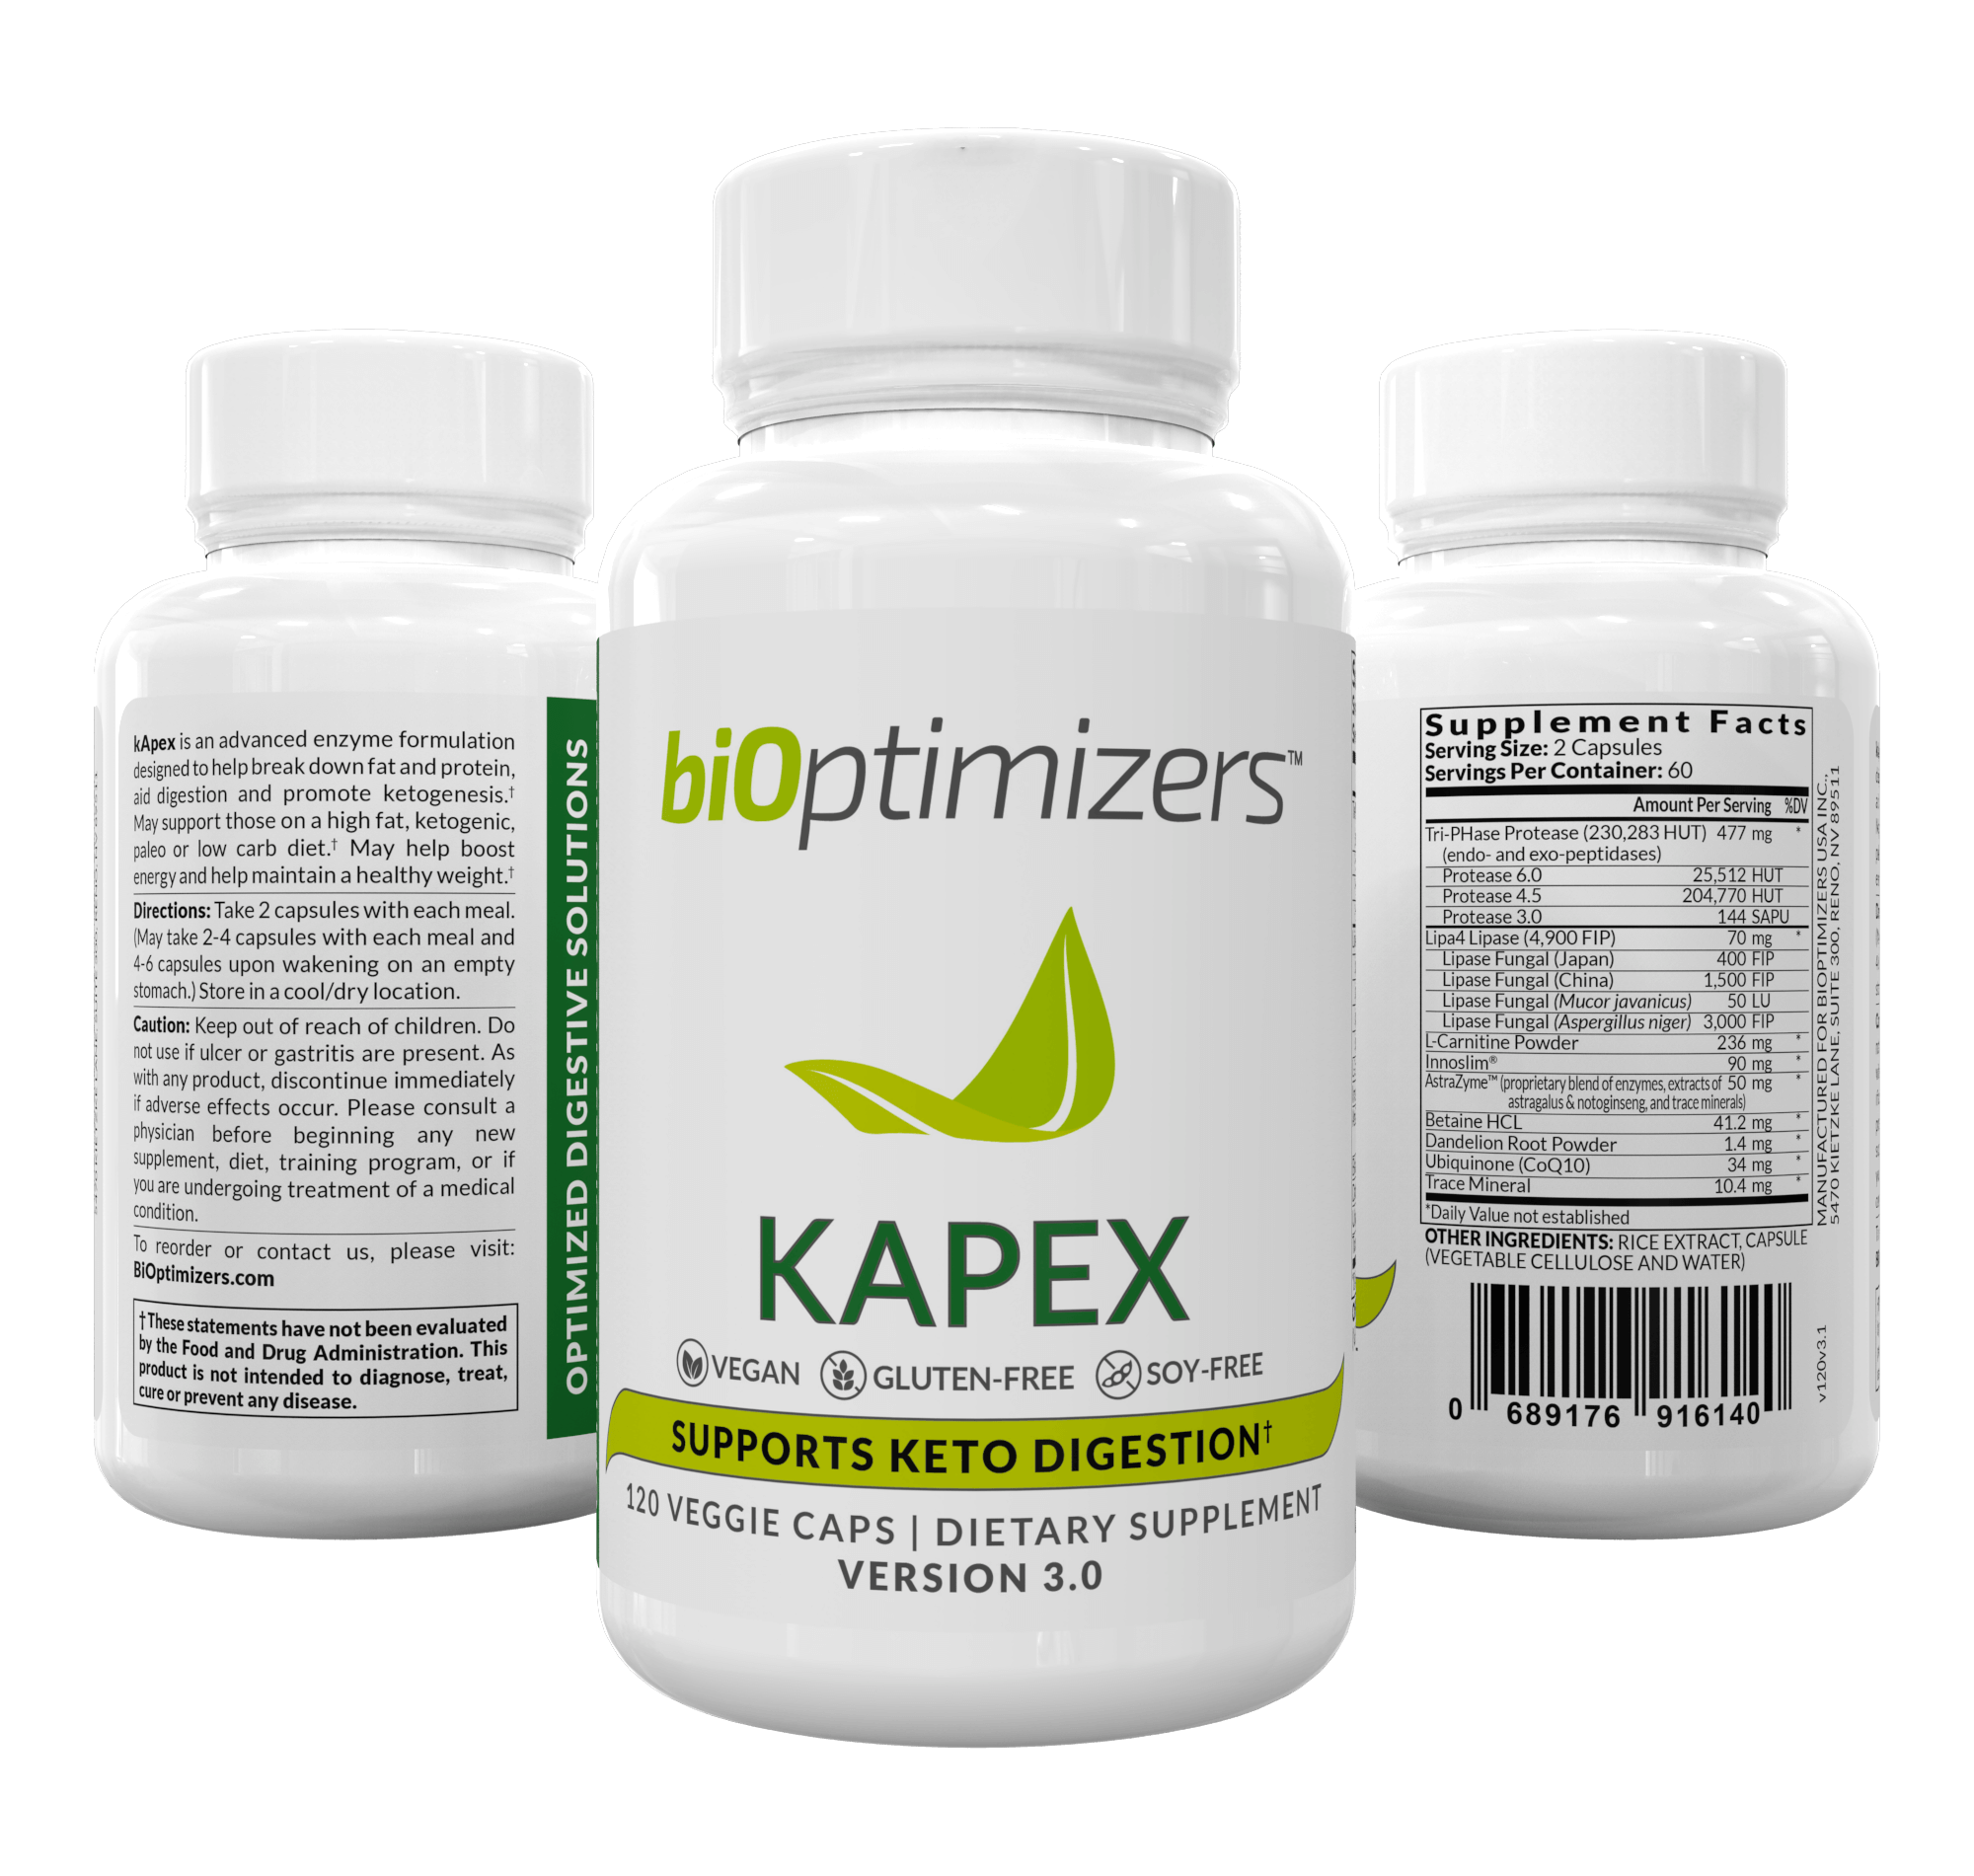 KAPEX improves digestion of fats